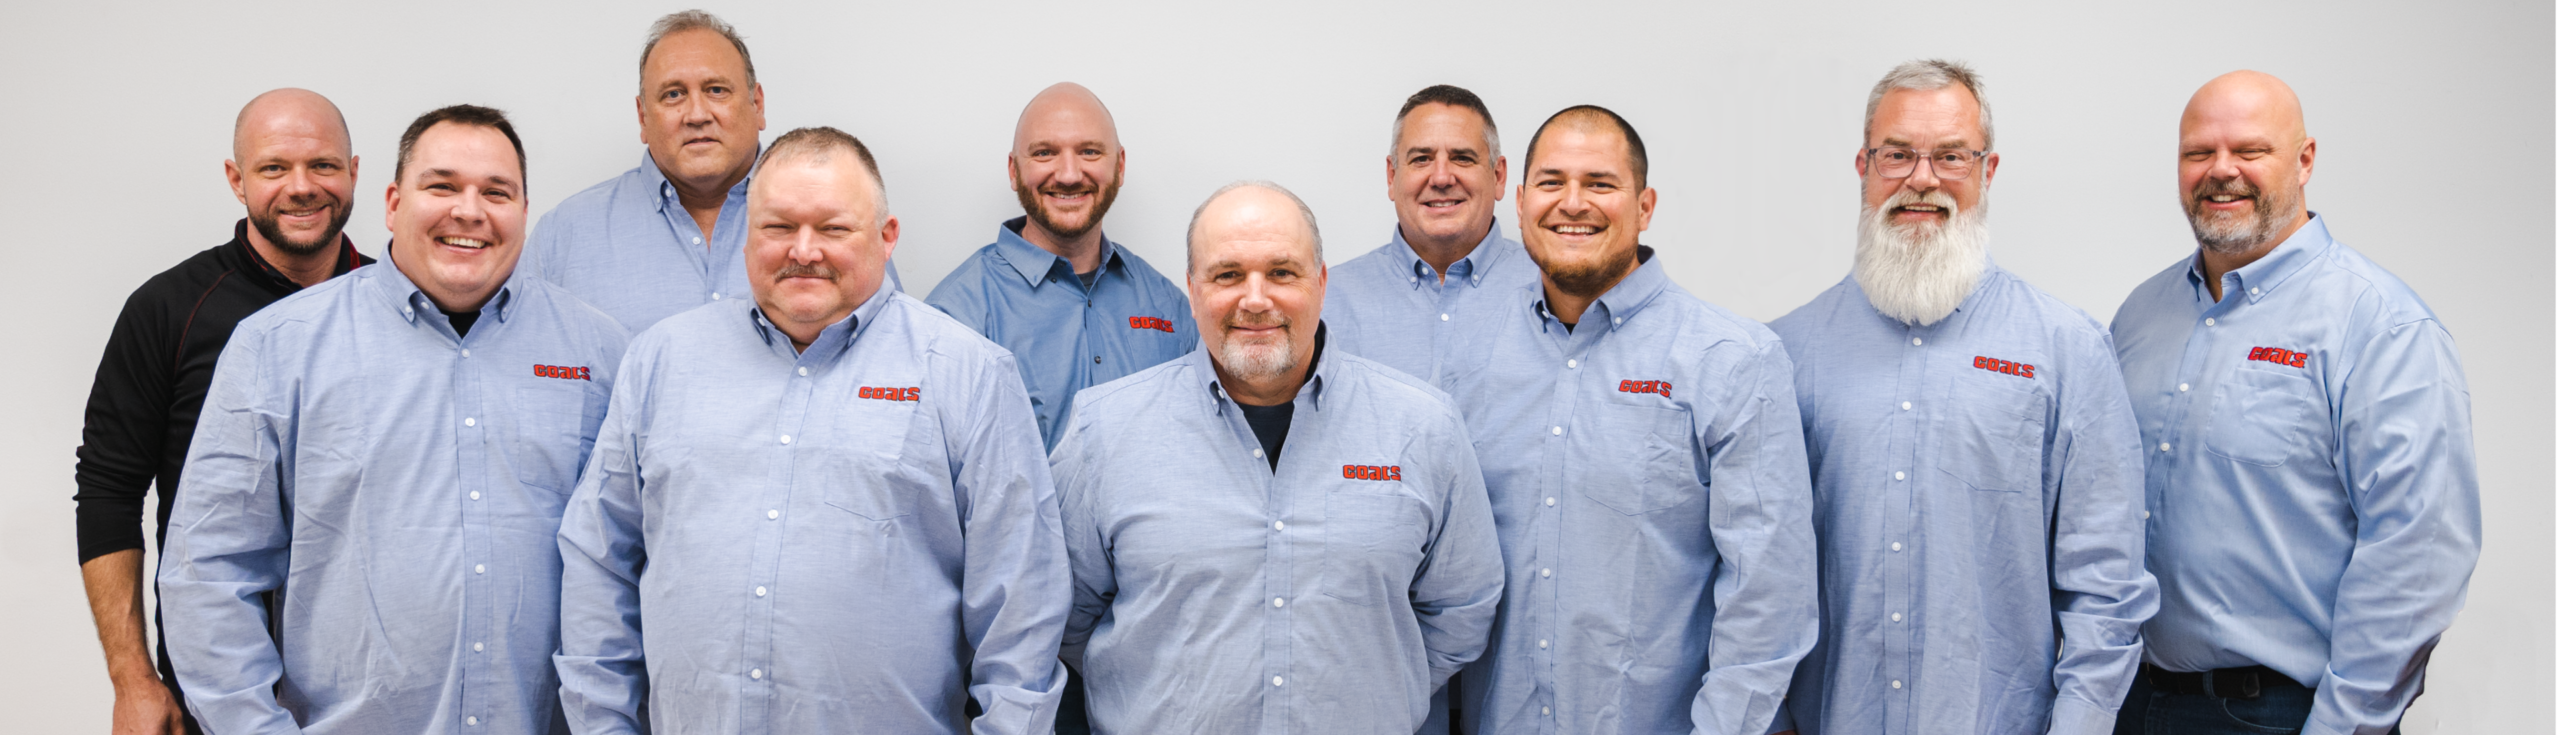 Coats Company Sales Team group photo wearing Coats branded shirts.